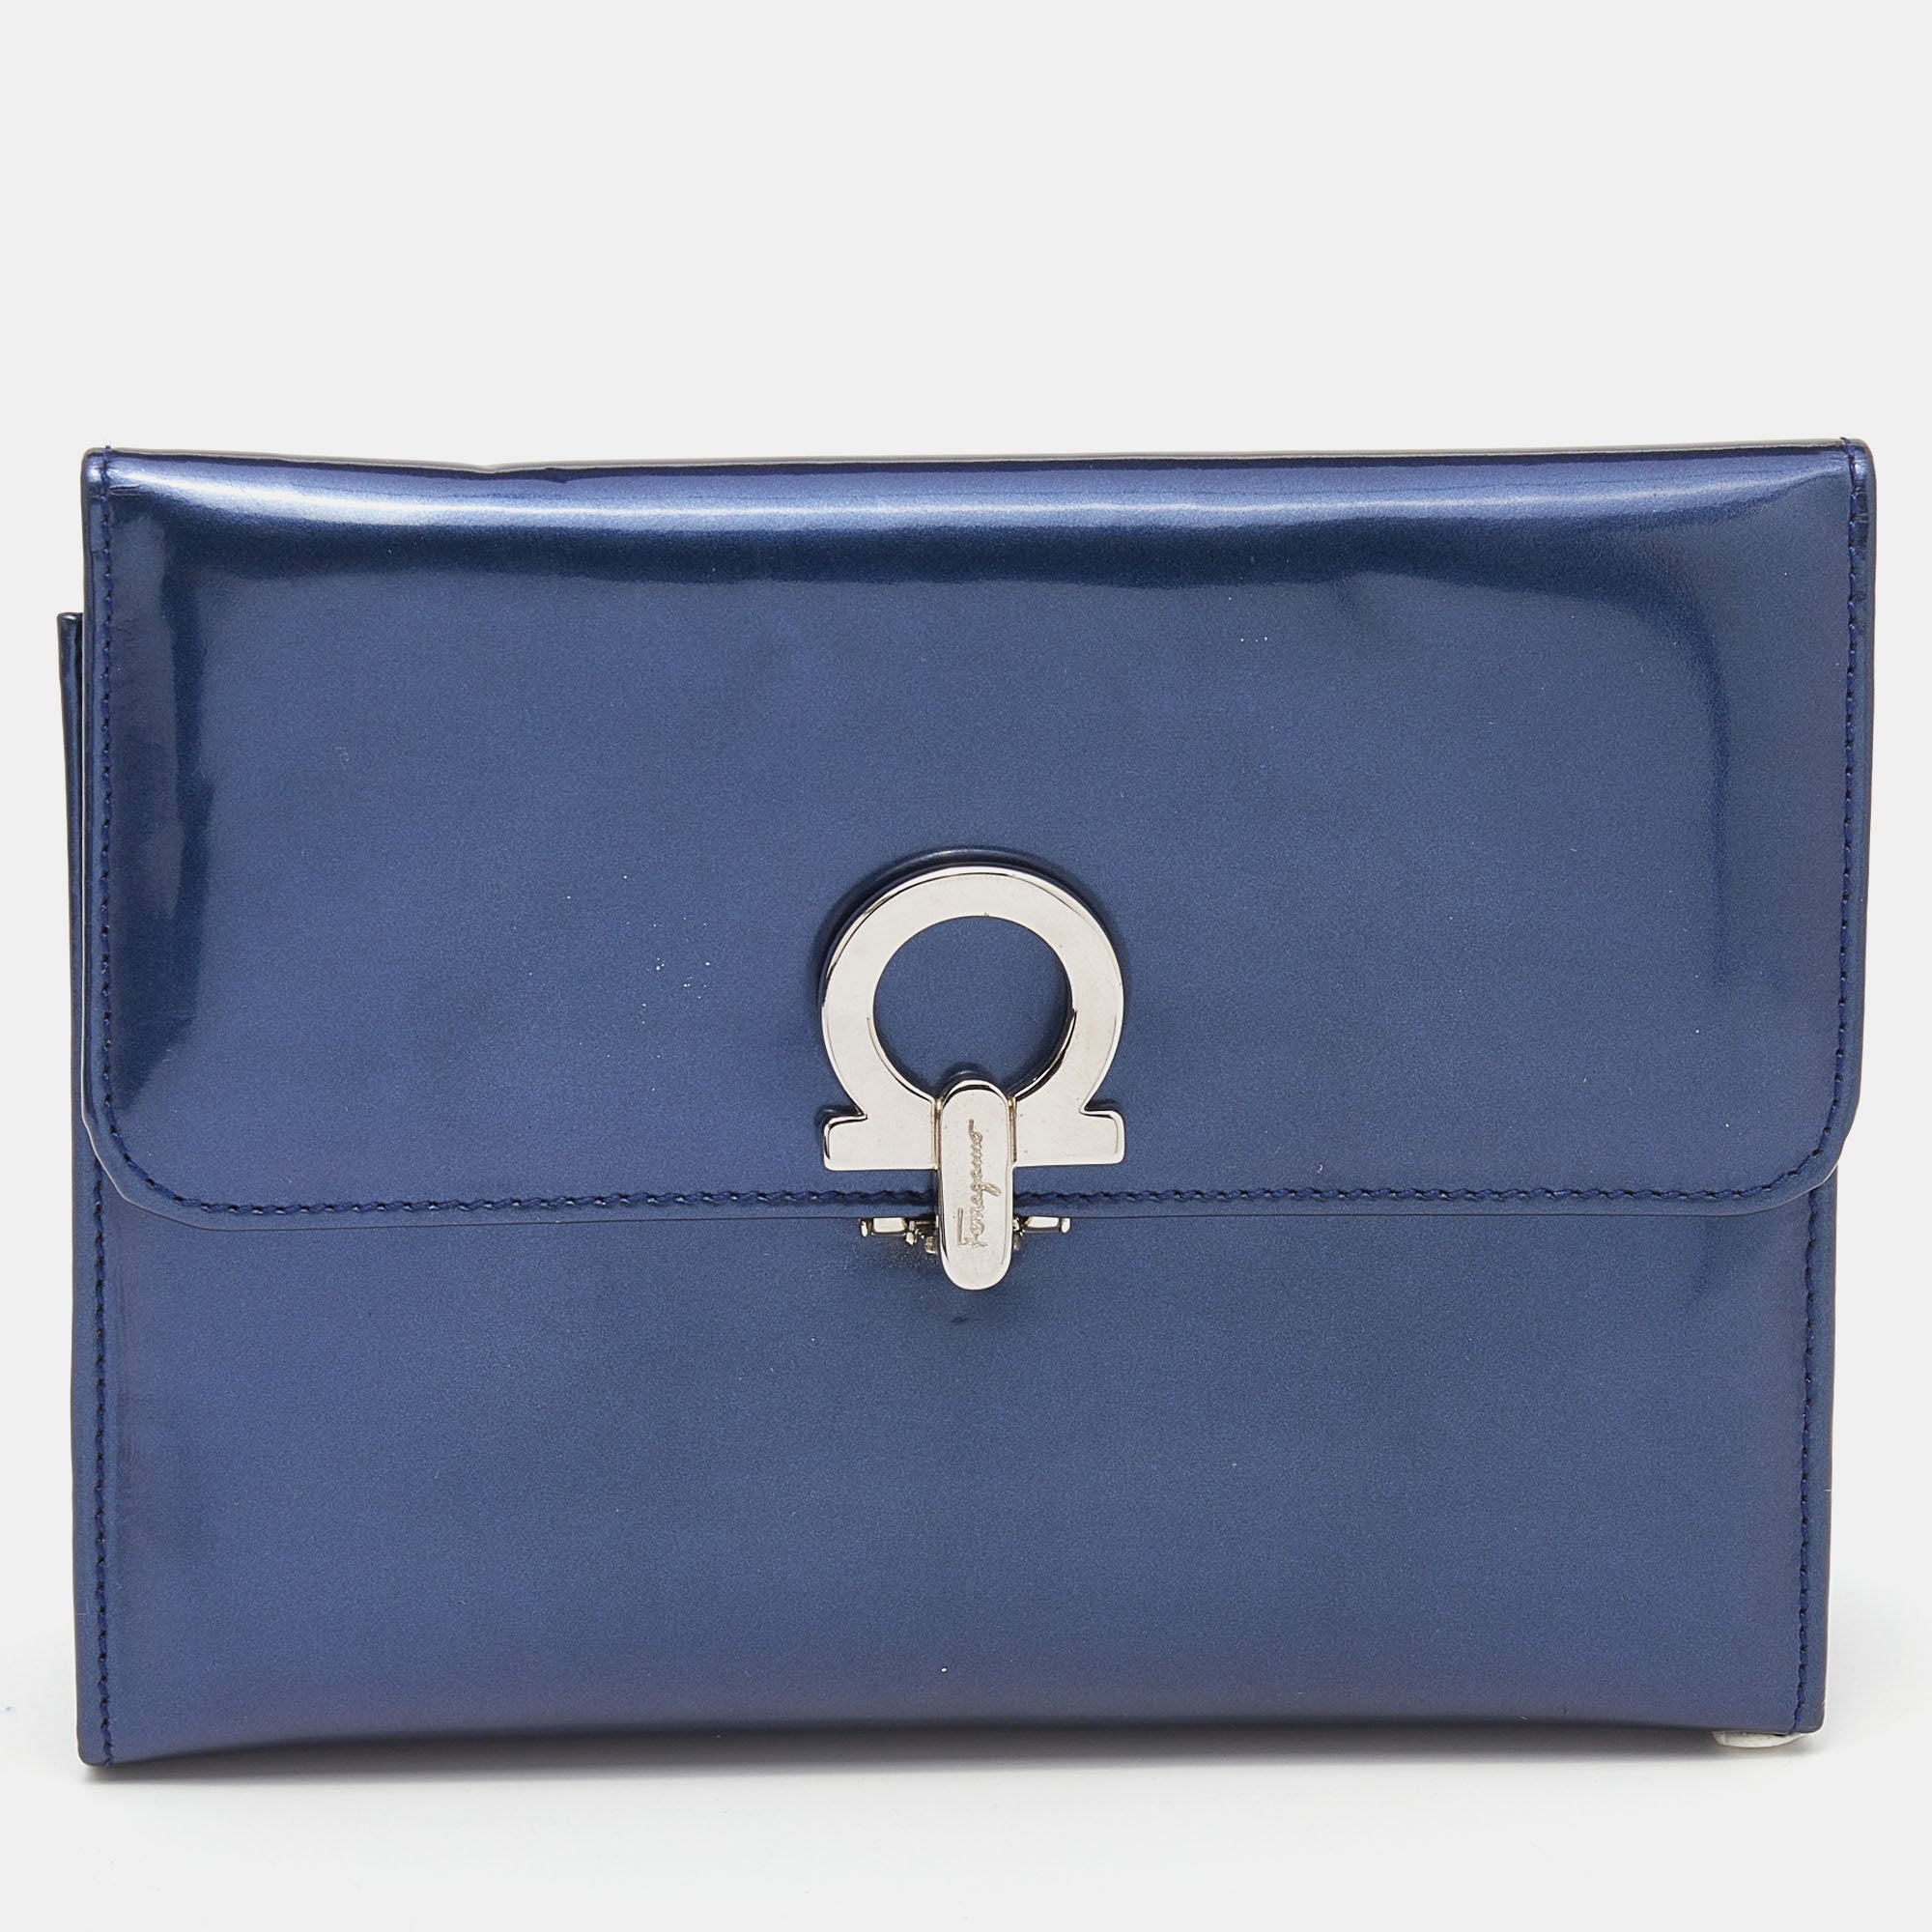 Luxe Deluxe Women's Clutch Bags - Blue